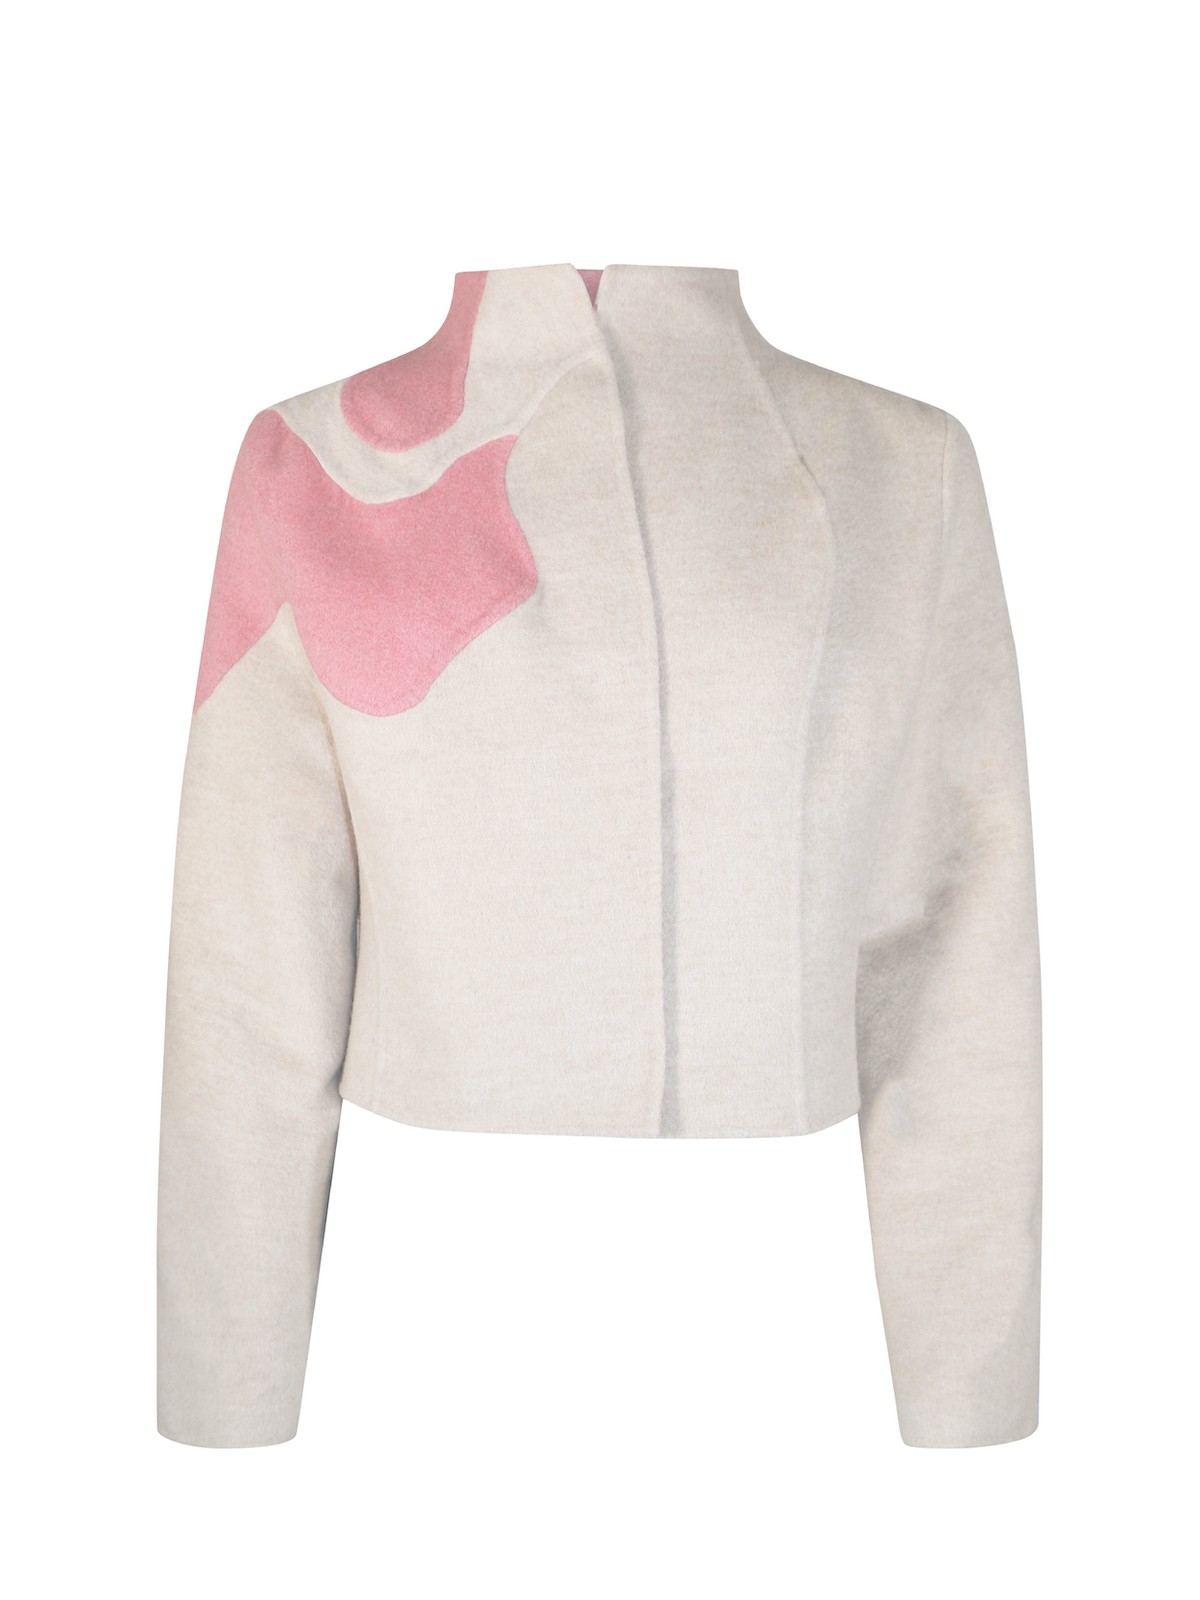 Orchid Kimono Jacket (Coral) | SAFIRO Luxury Garments for Women